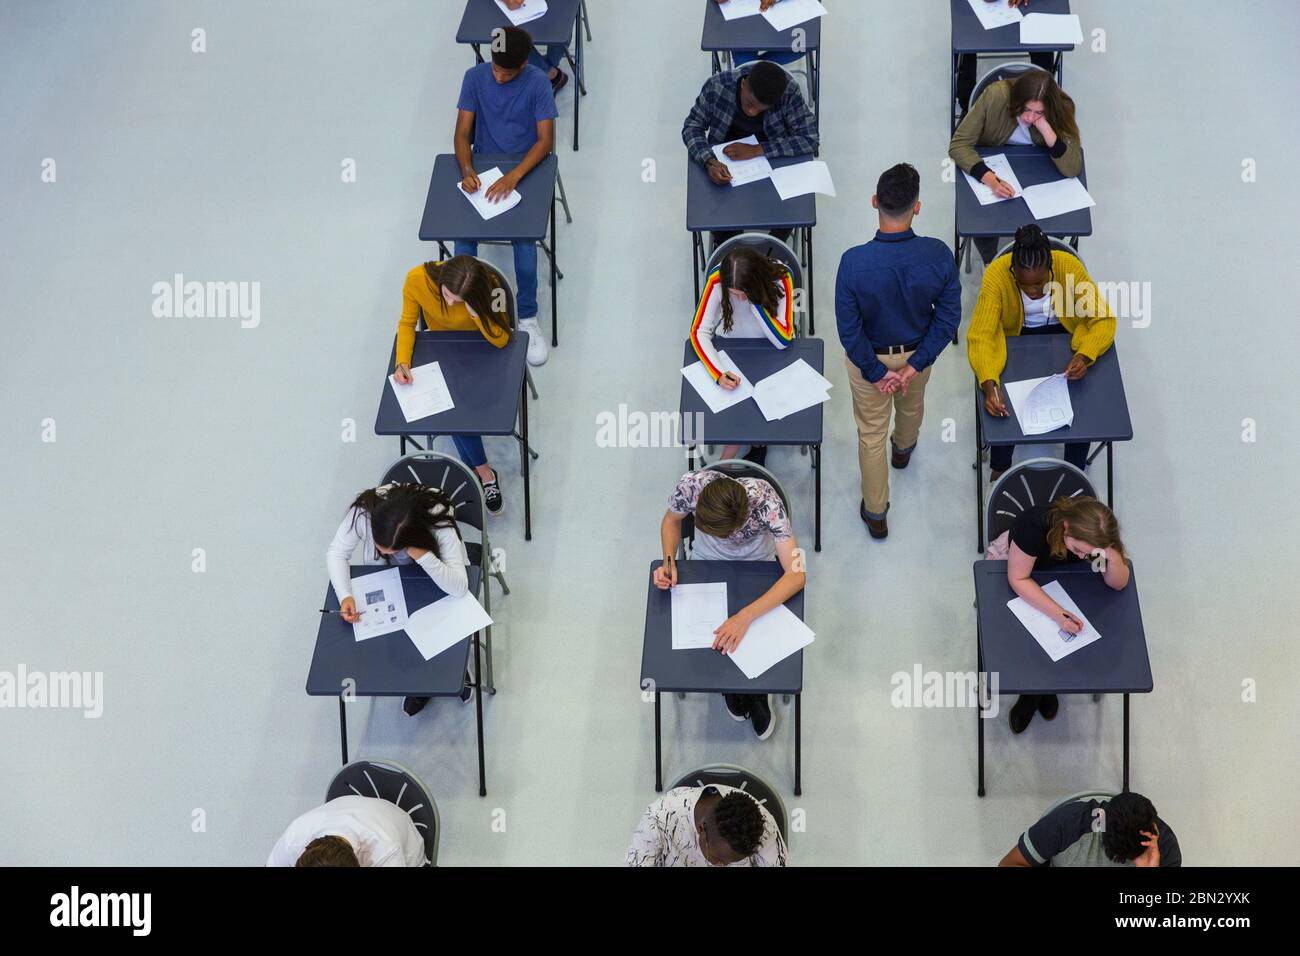 High school teacher supervising students taking exam at desks Stock Photo